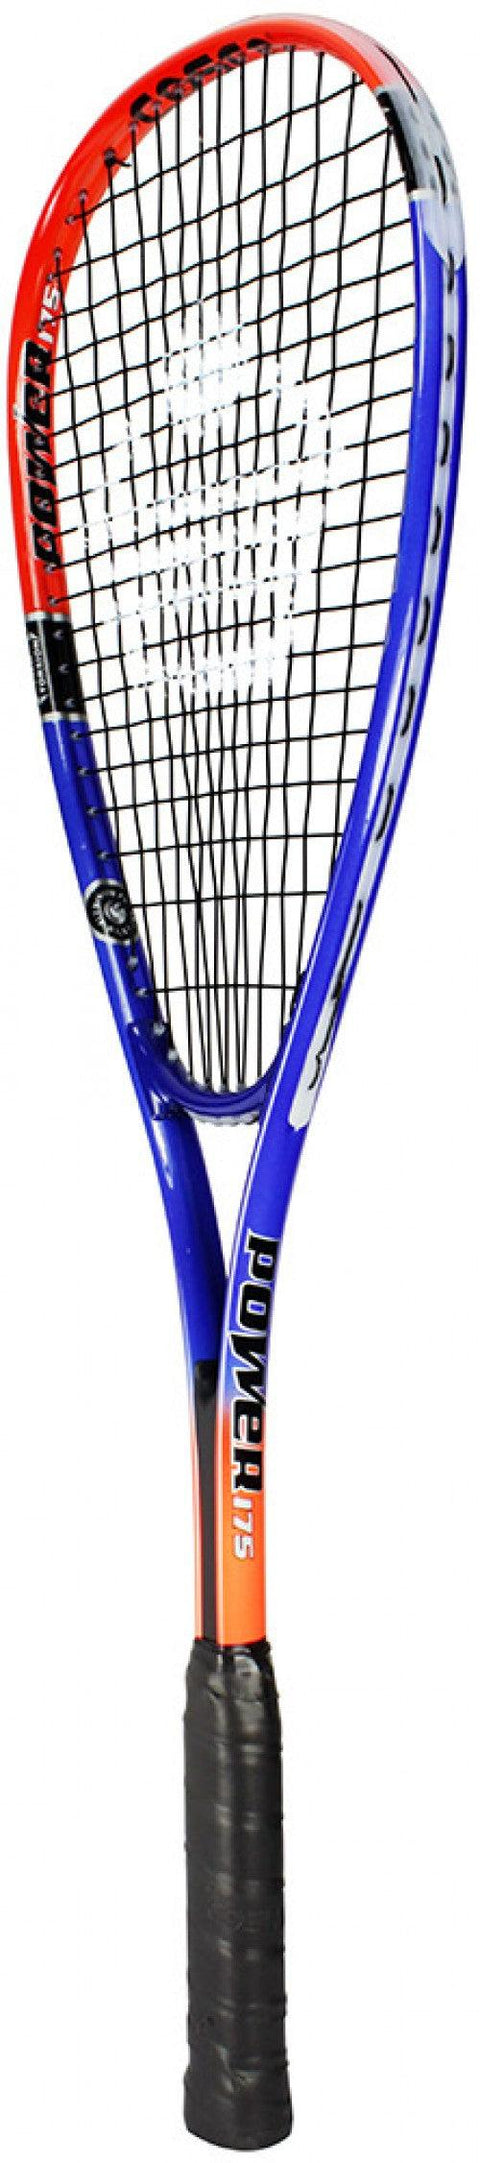 Cosco Power -175 Squash Racket | KIBI Sports - KIBI SPORTS